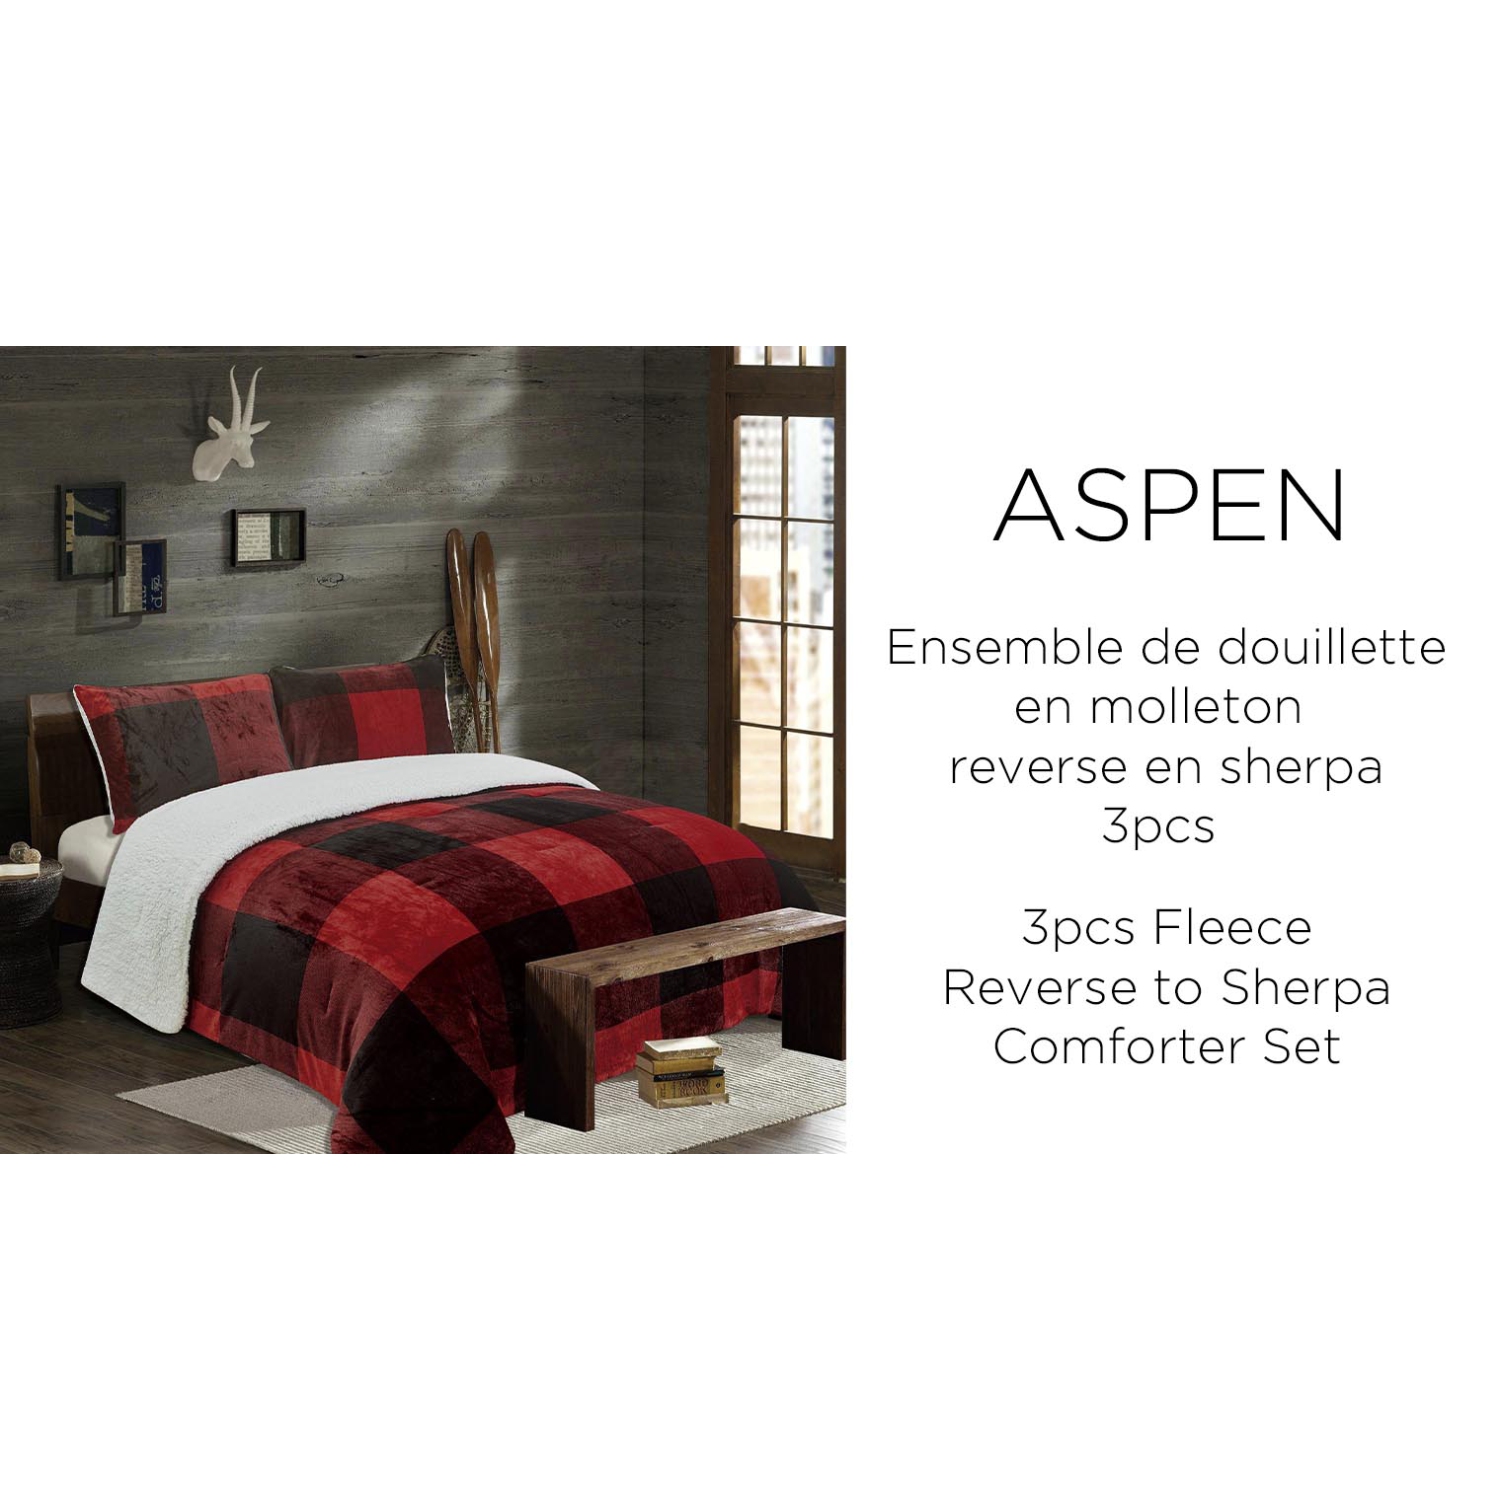 Lt Alpin 2pcs Fleece Rev To Sherpa, Red Twin Bed Set